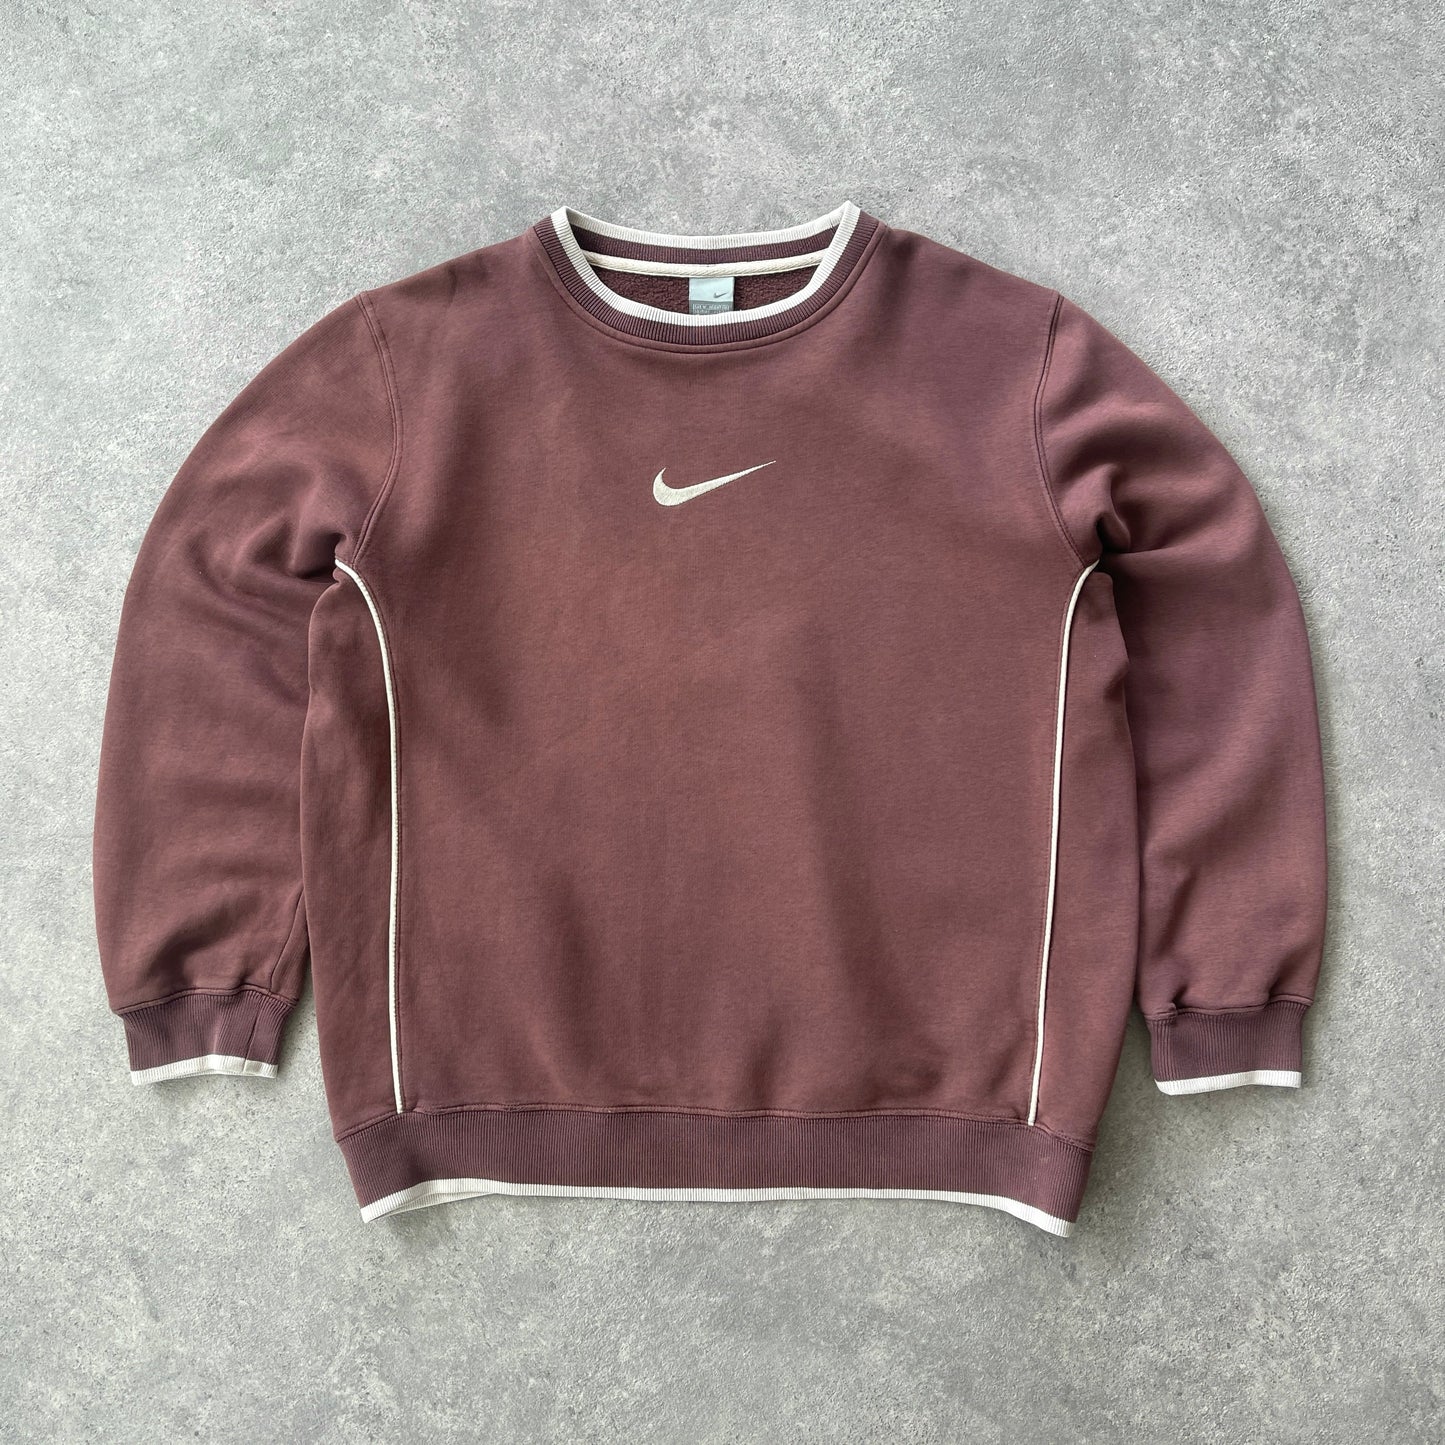 Nike 2000s heavyweight embroidered sweatshirt (M)